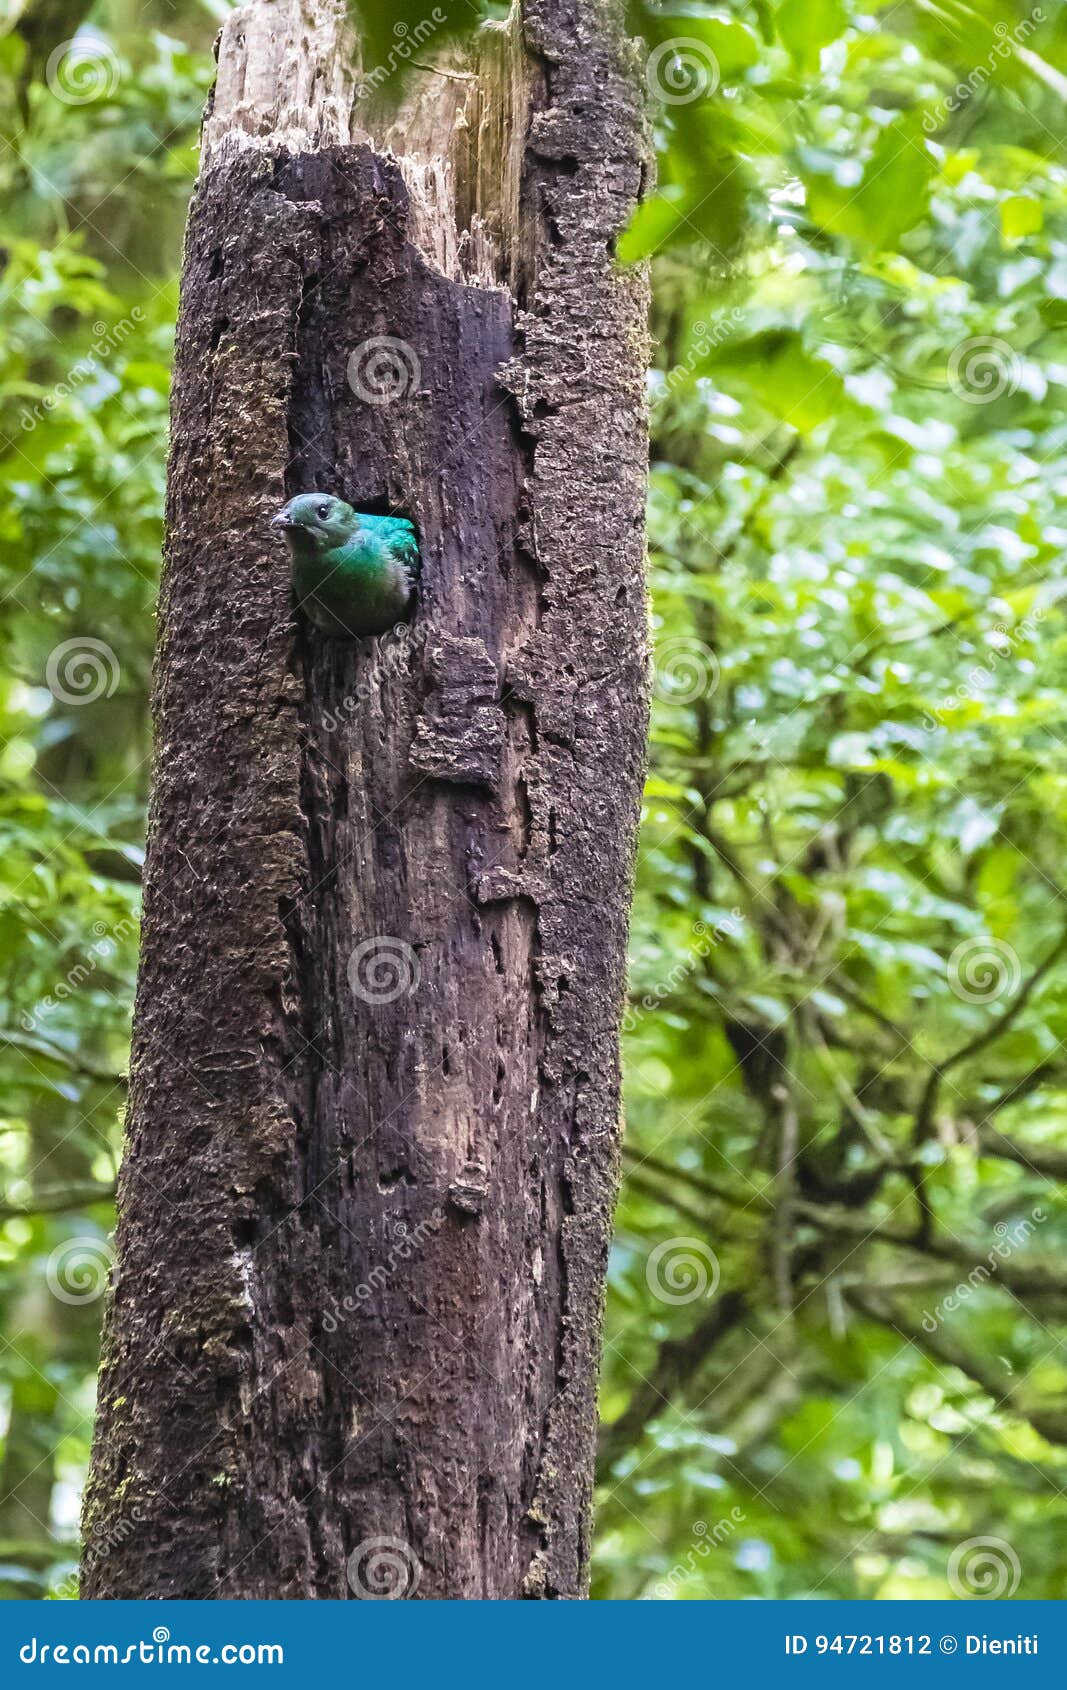 female resplendent quetzal - monteverde cloud forest reserve